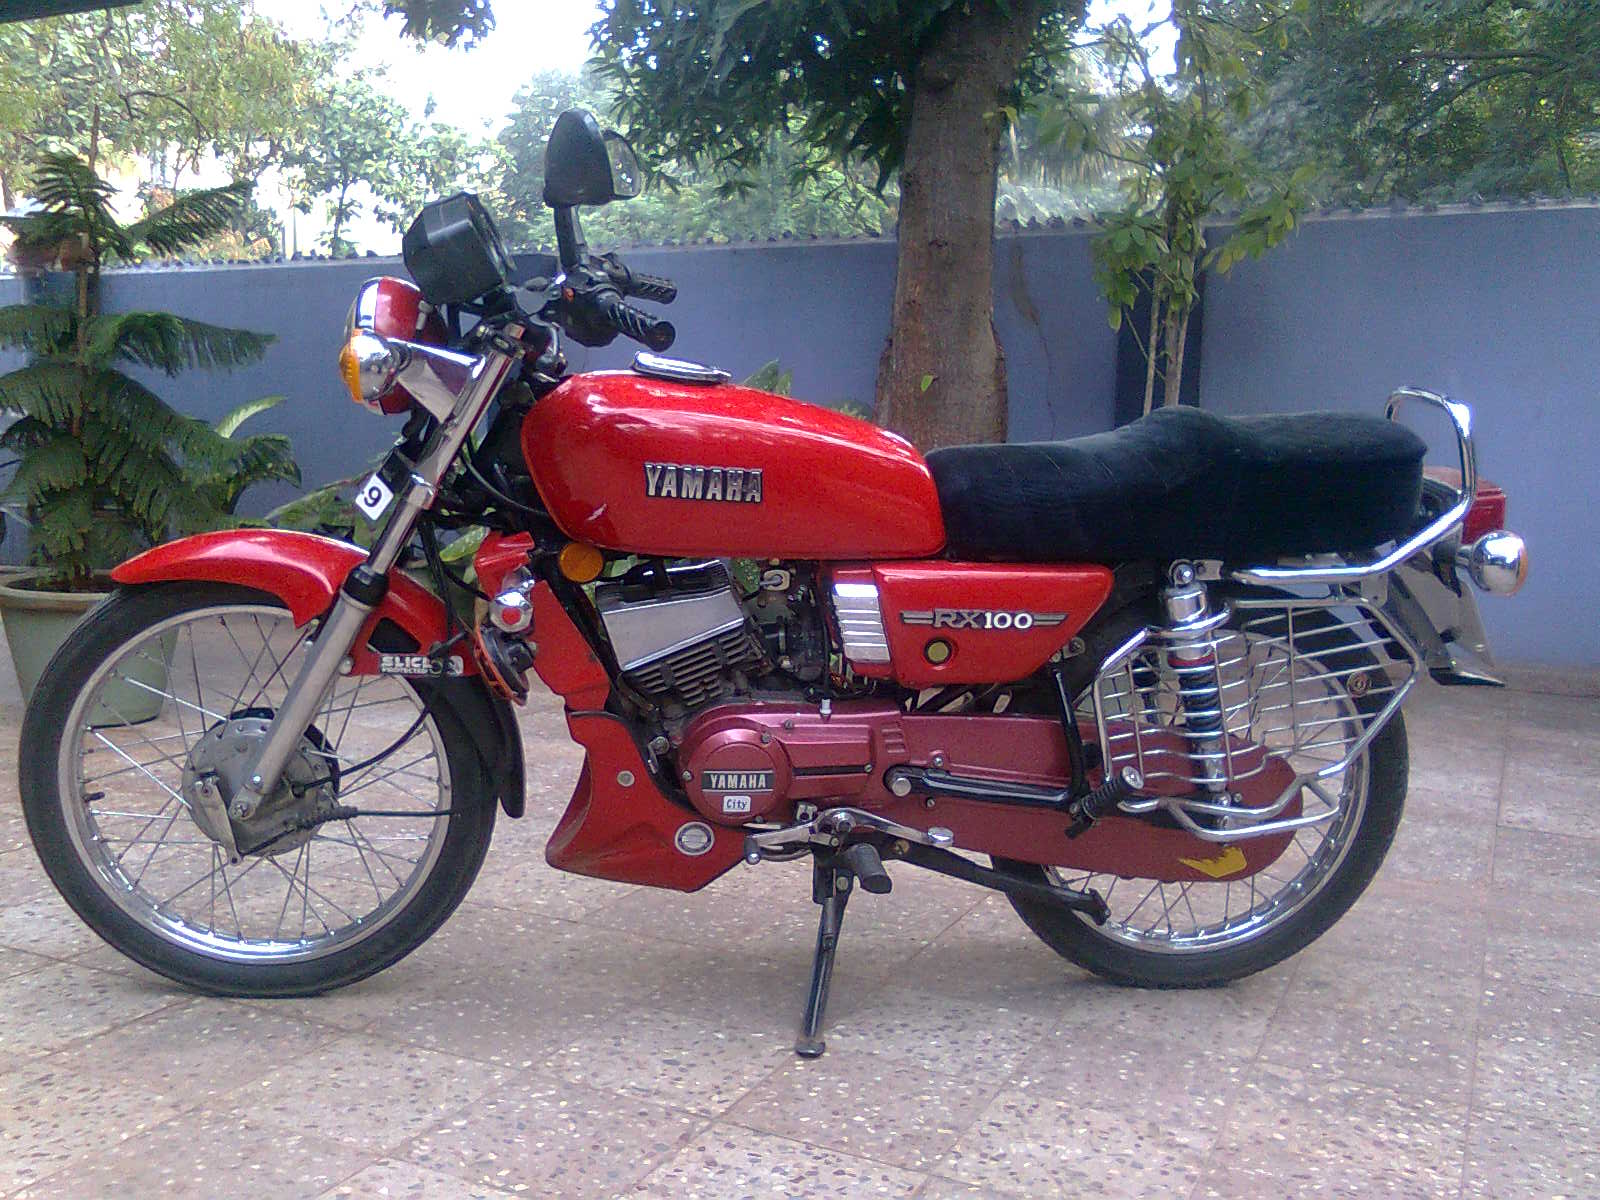 R X 100 Yamaha Loved By All Bikers! - YAMAHA RX100 ...